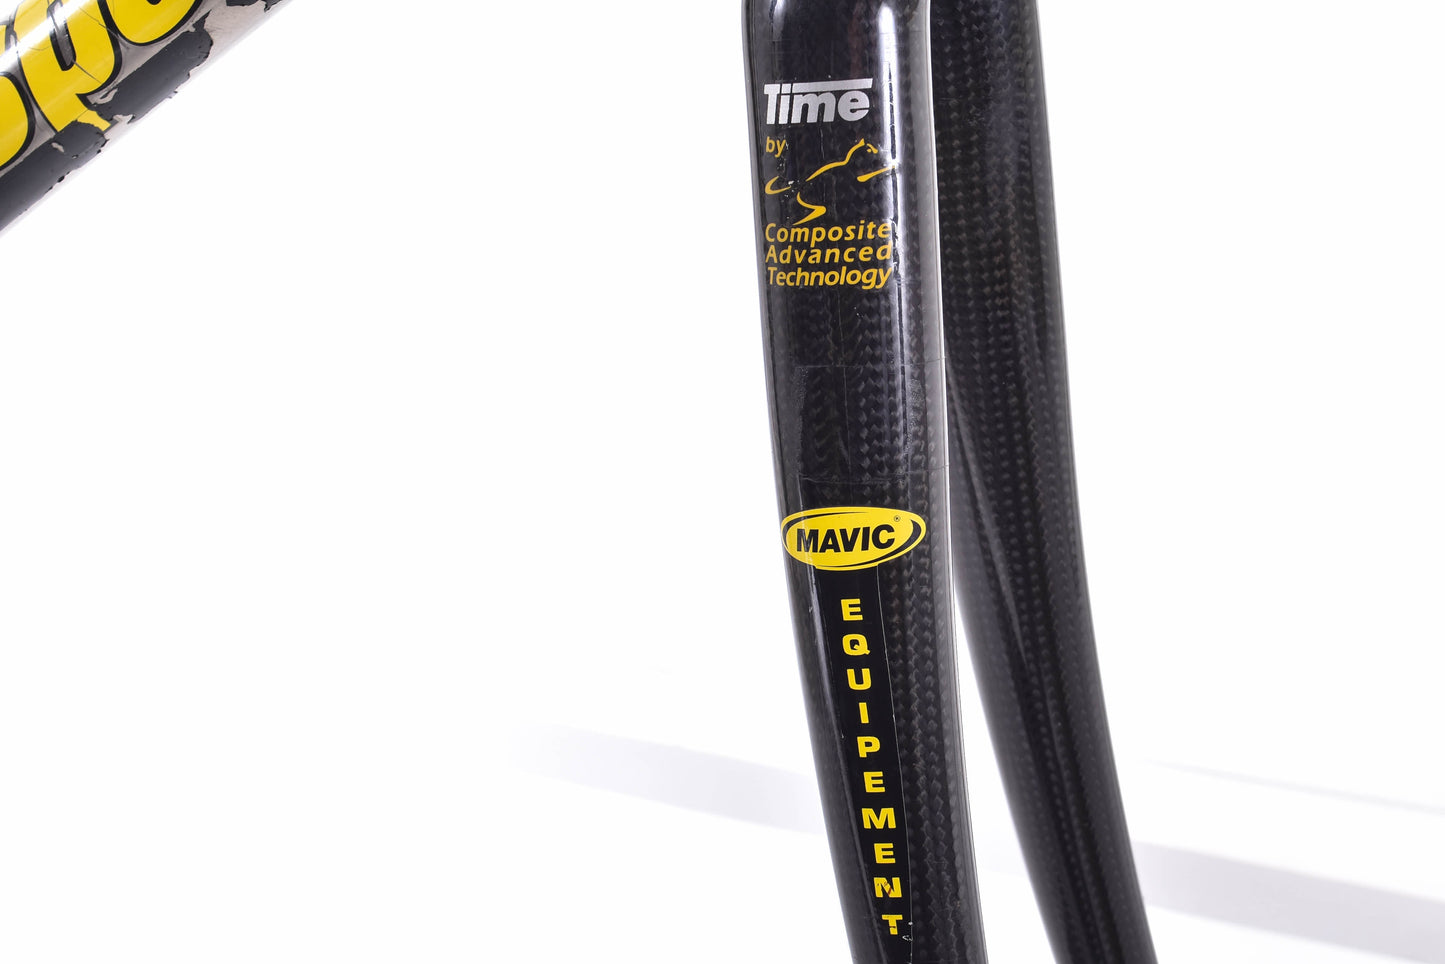 USED Litespeed Classic 58cm Titanium Road Bike Frameset w/ Time Carbon Fork Chris King 1" Headset